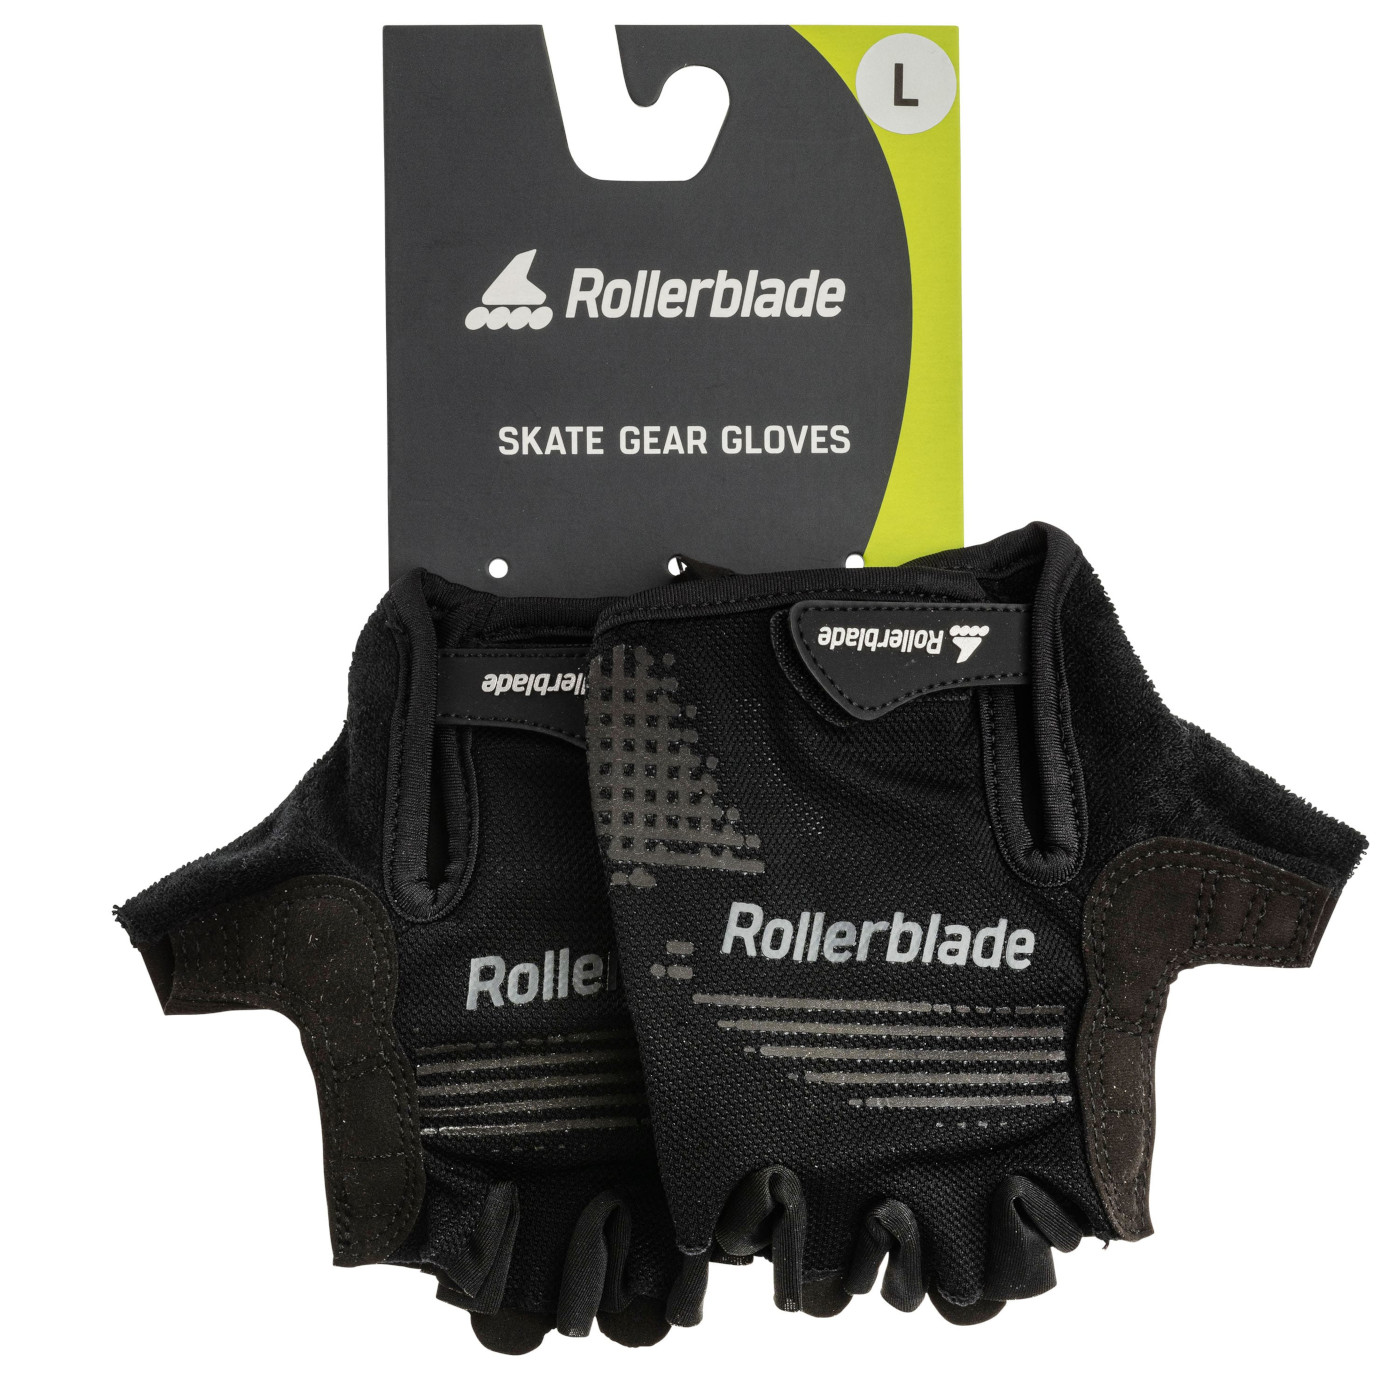 Image of Rollerblade Skate Gear Protection Gloves - black